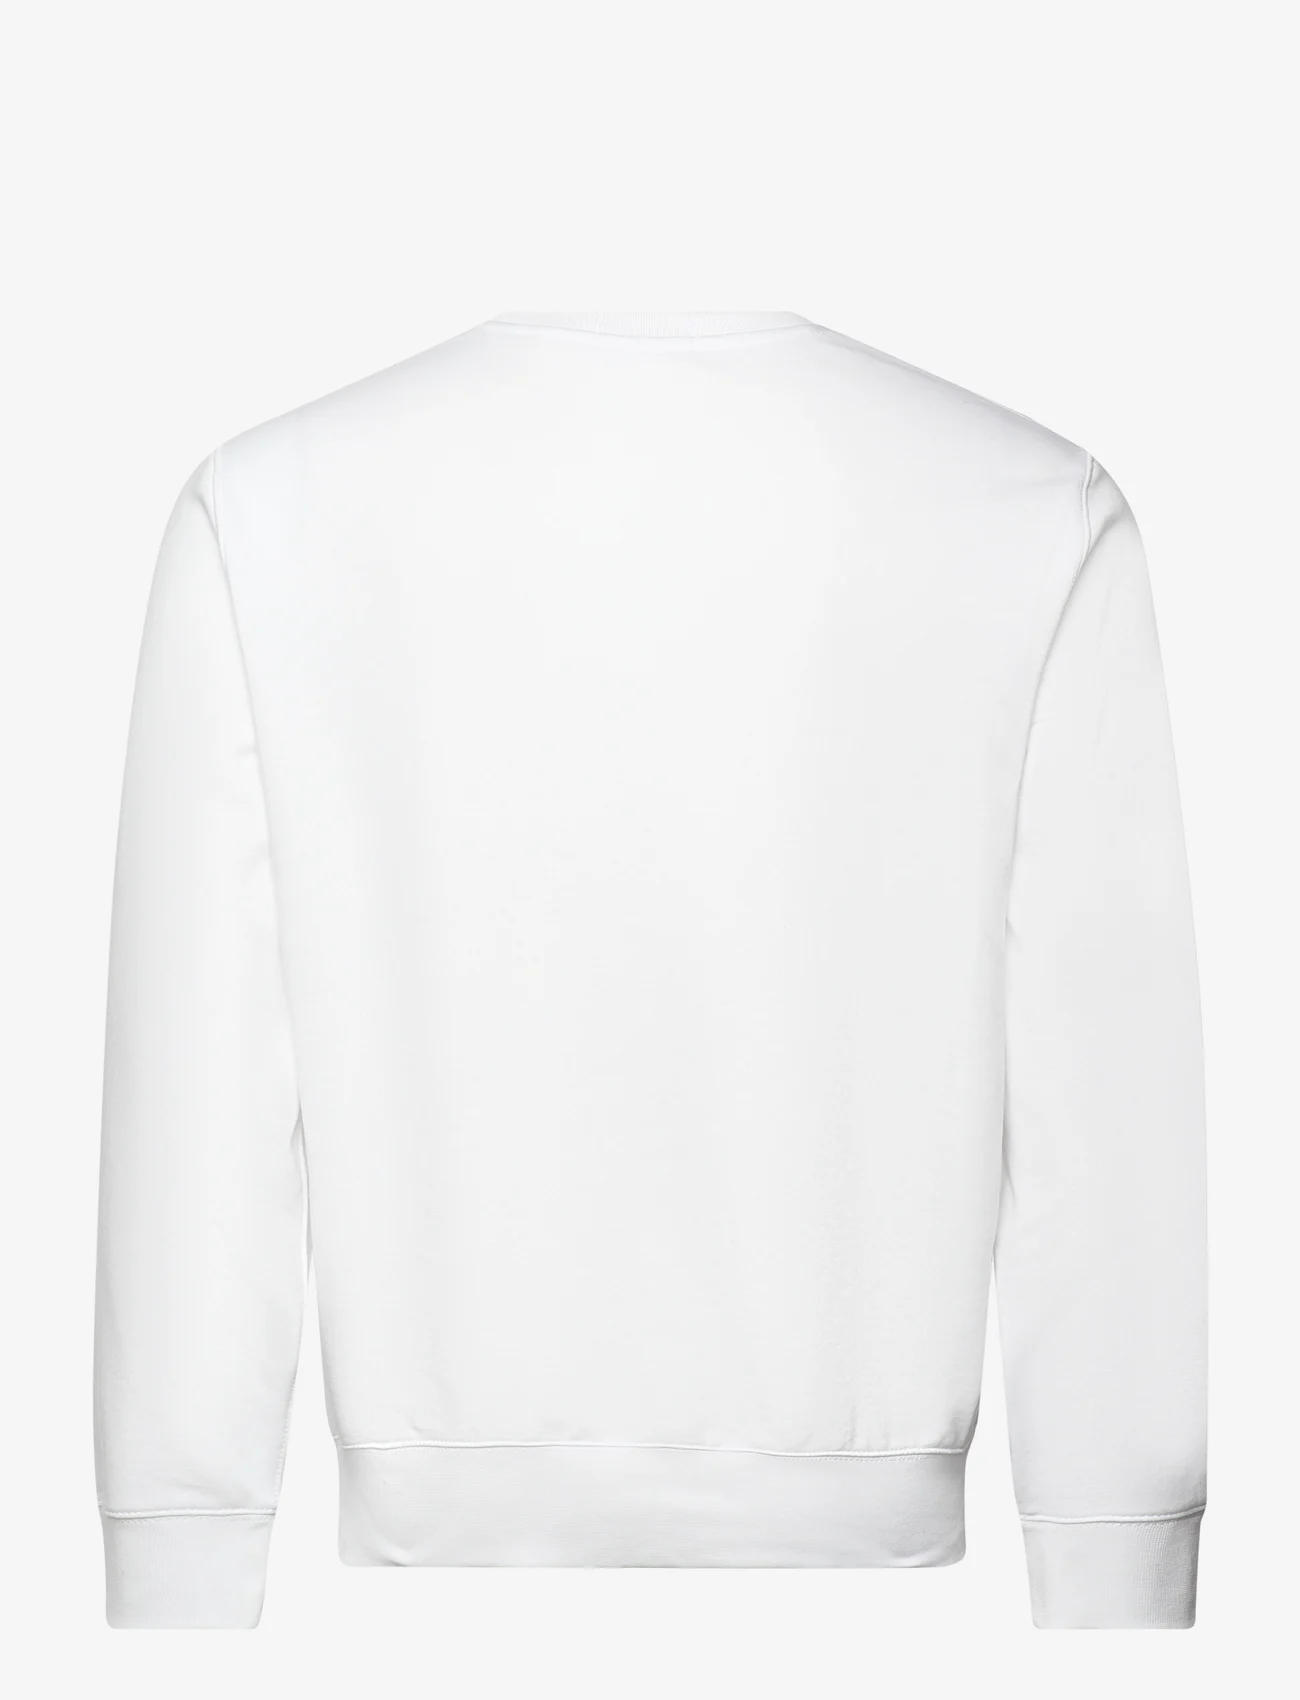 Polo Ralph Lauren - Polo Bear Fleece Sweatshirt - shop etter anledning - sp24 white beach - 1